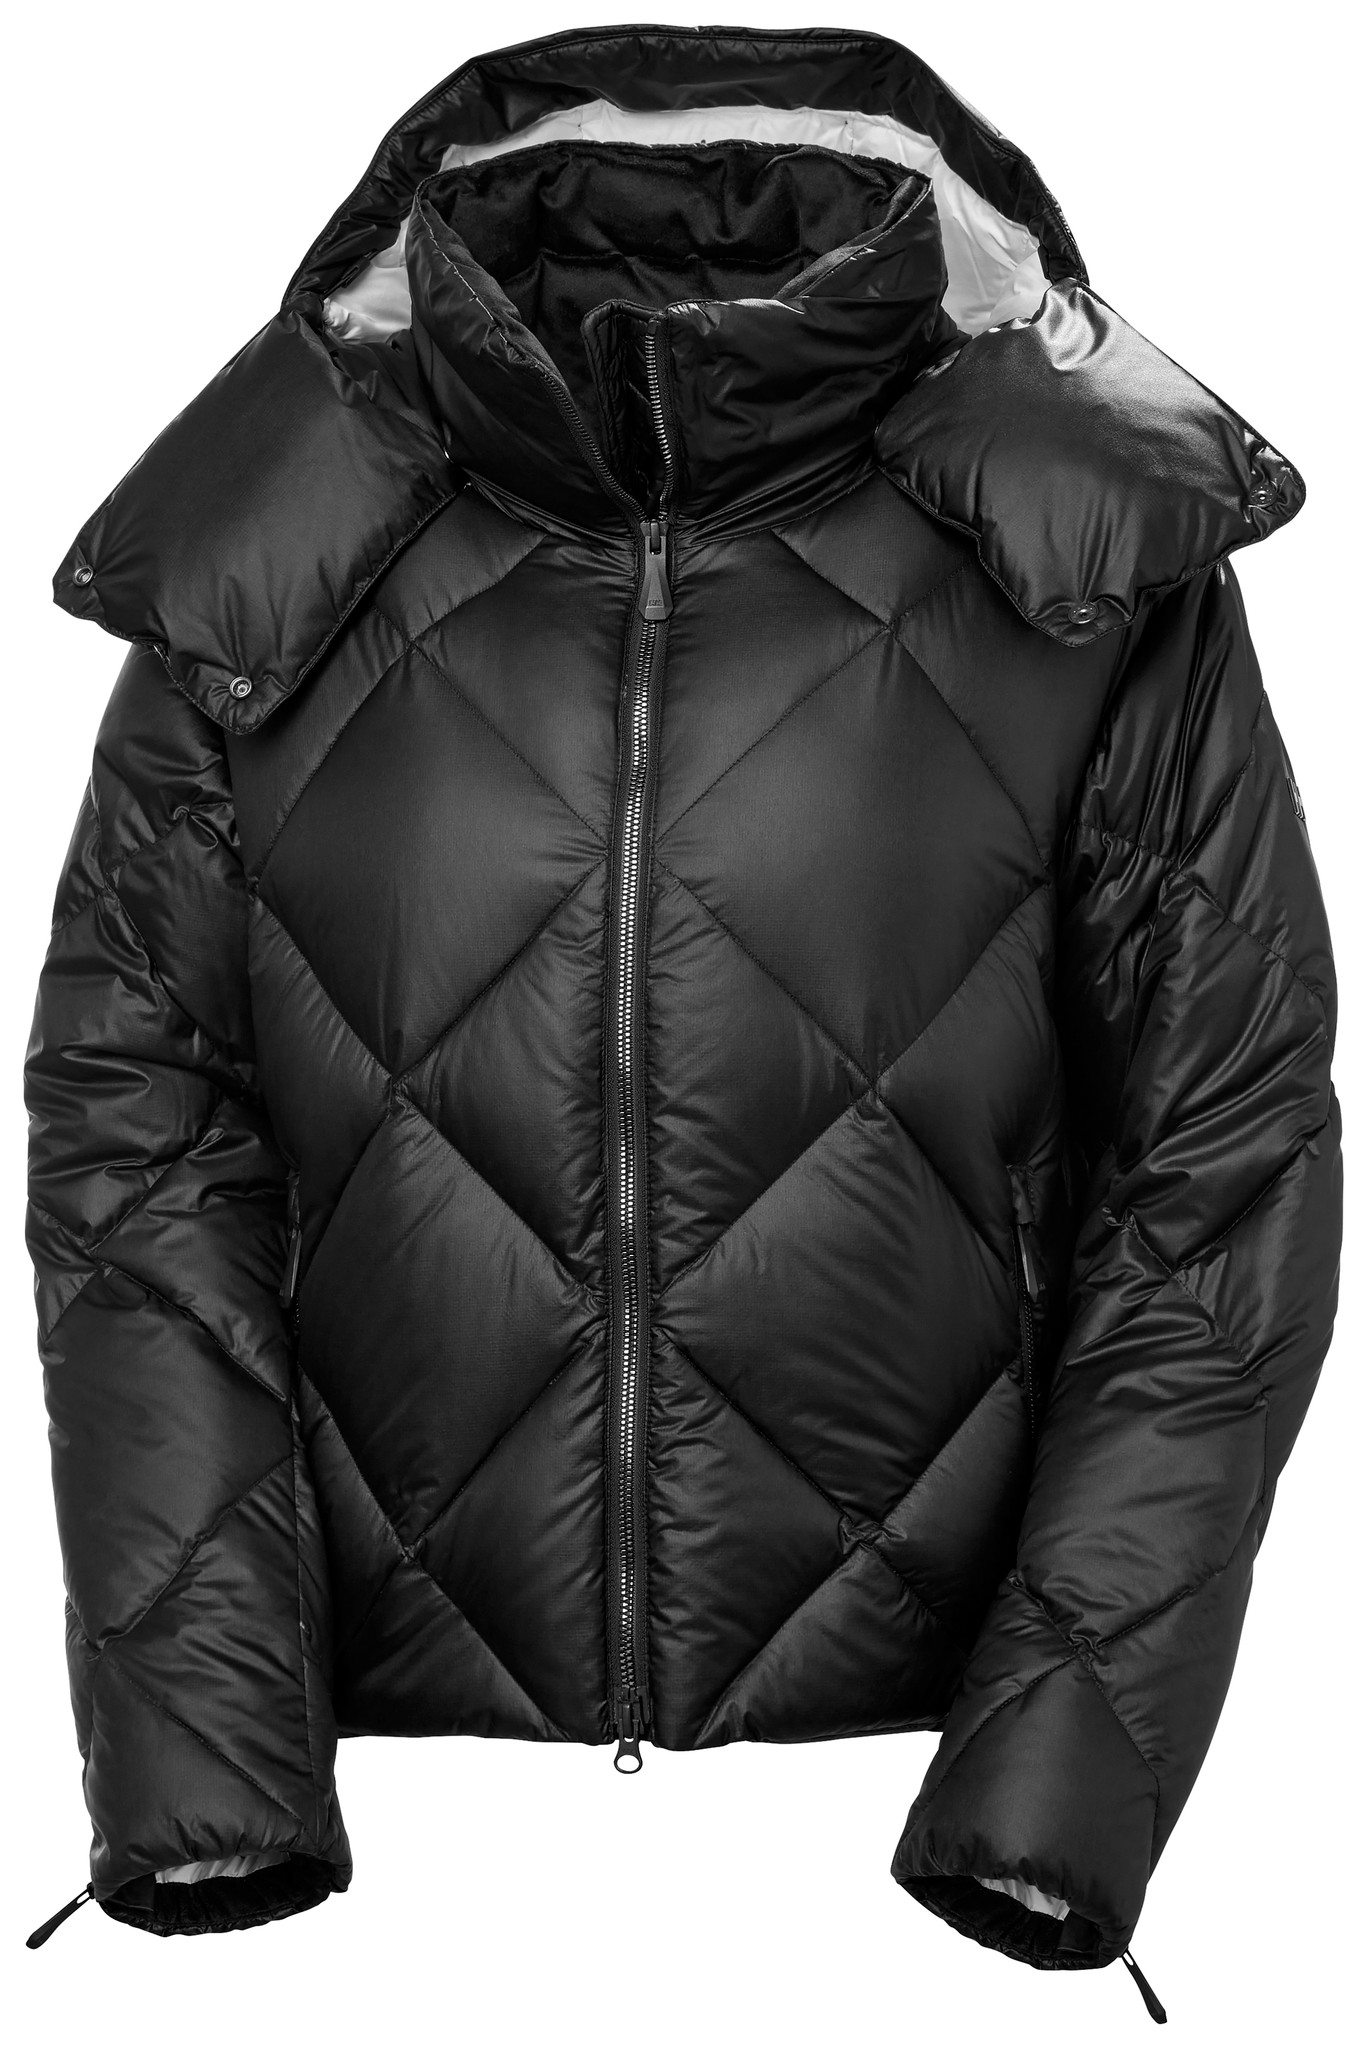 Helly Hansen Diamond Women's Jacket: Black, 65946_990| The Nordic Shop